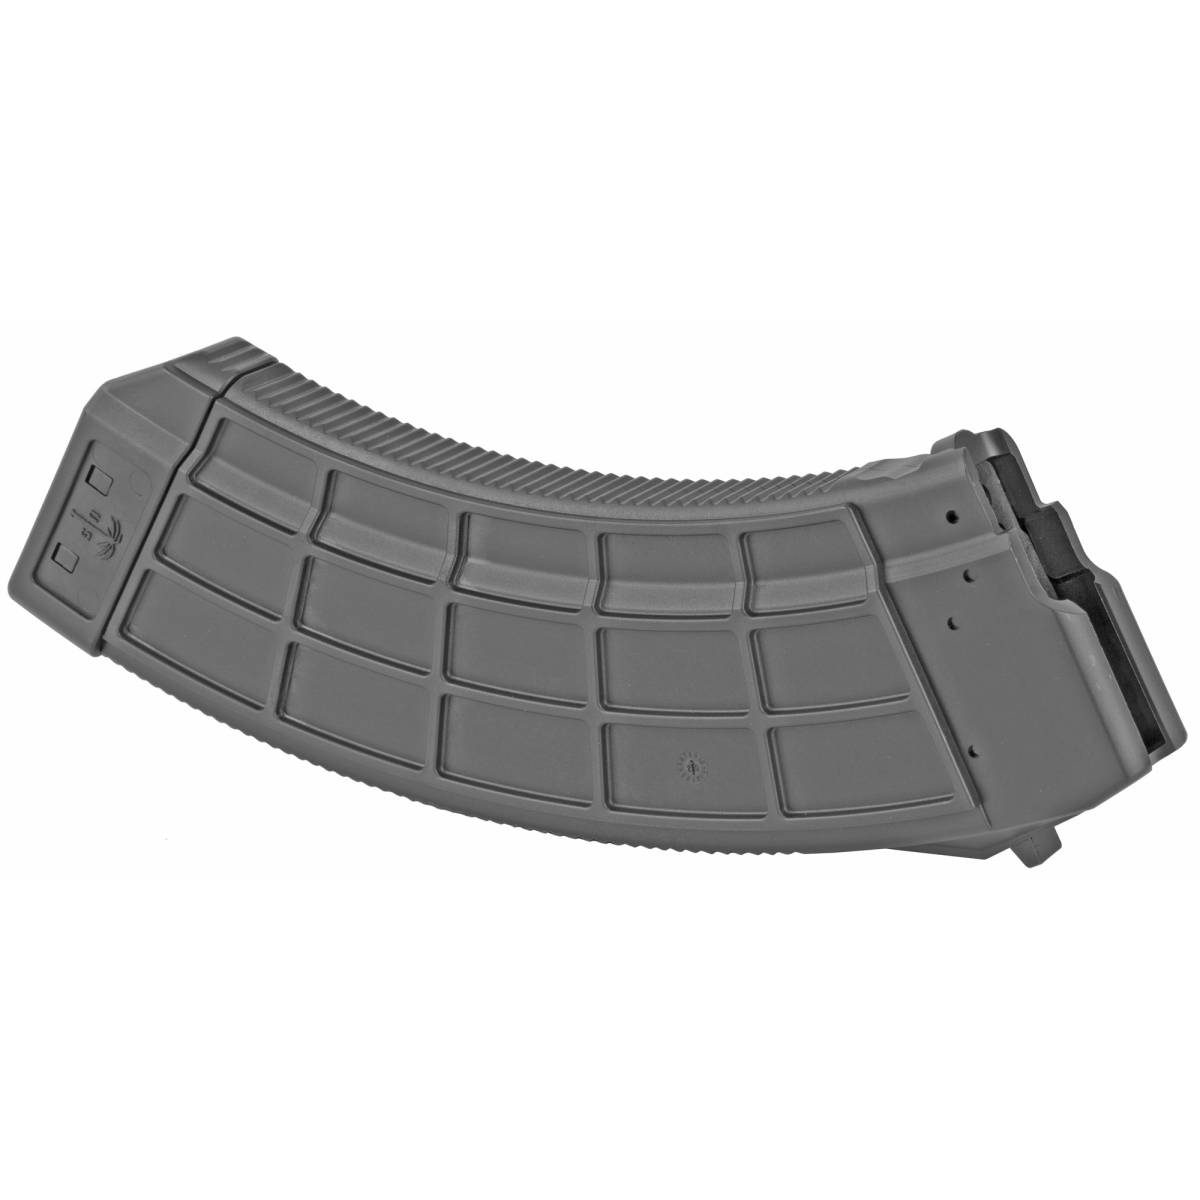 US Palm MA943A Standard 30rd 7.62x39mm For AK-47 Black Polymer-img-1